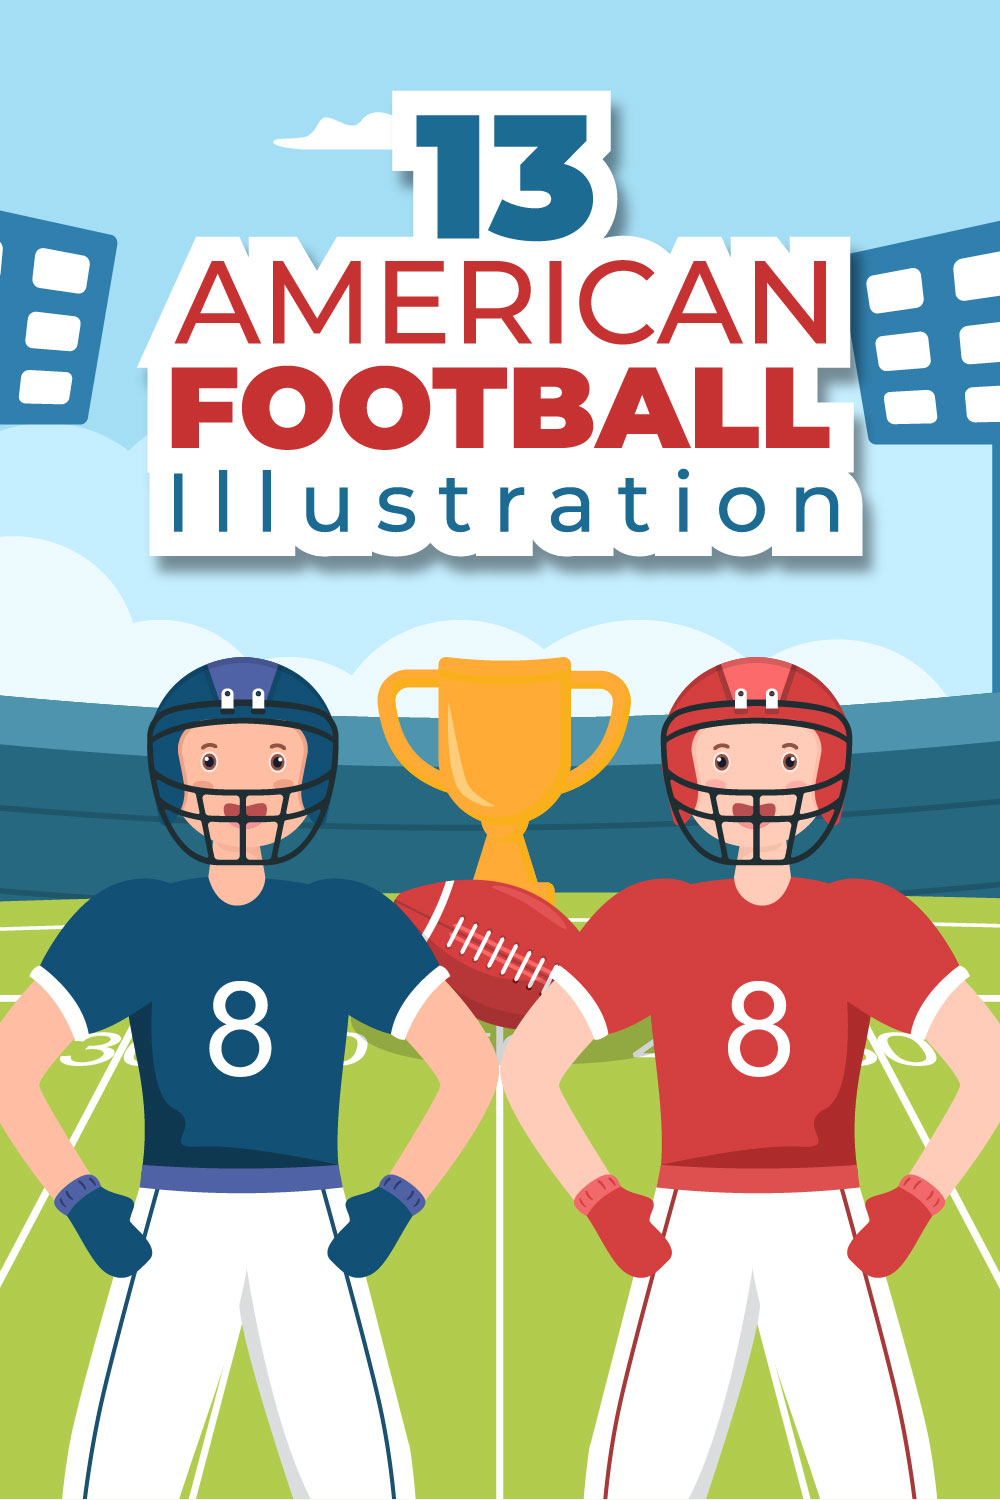 13 American Football Sports Player Illustration Pinterest Image.